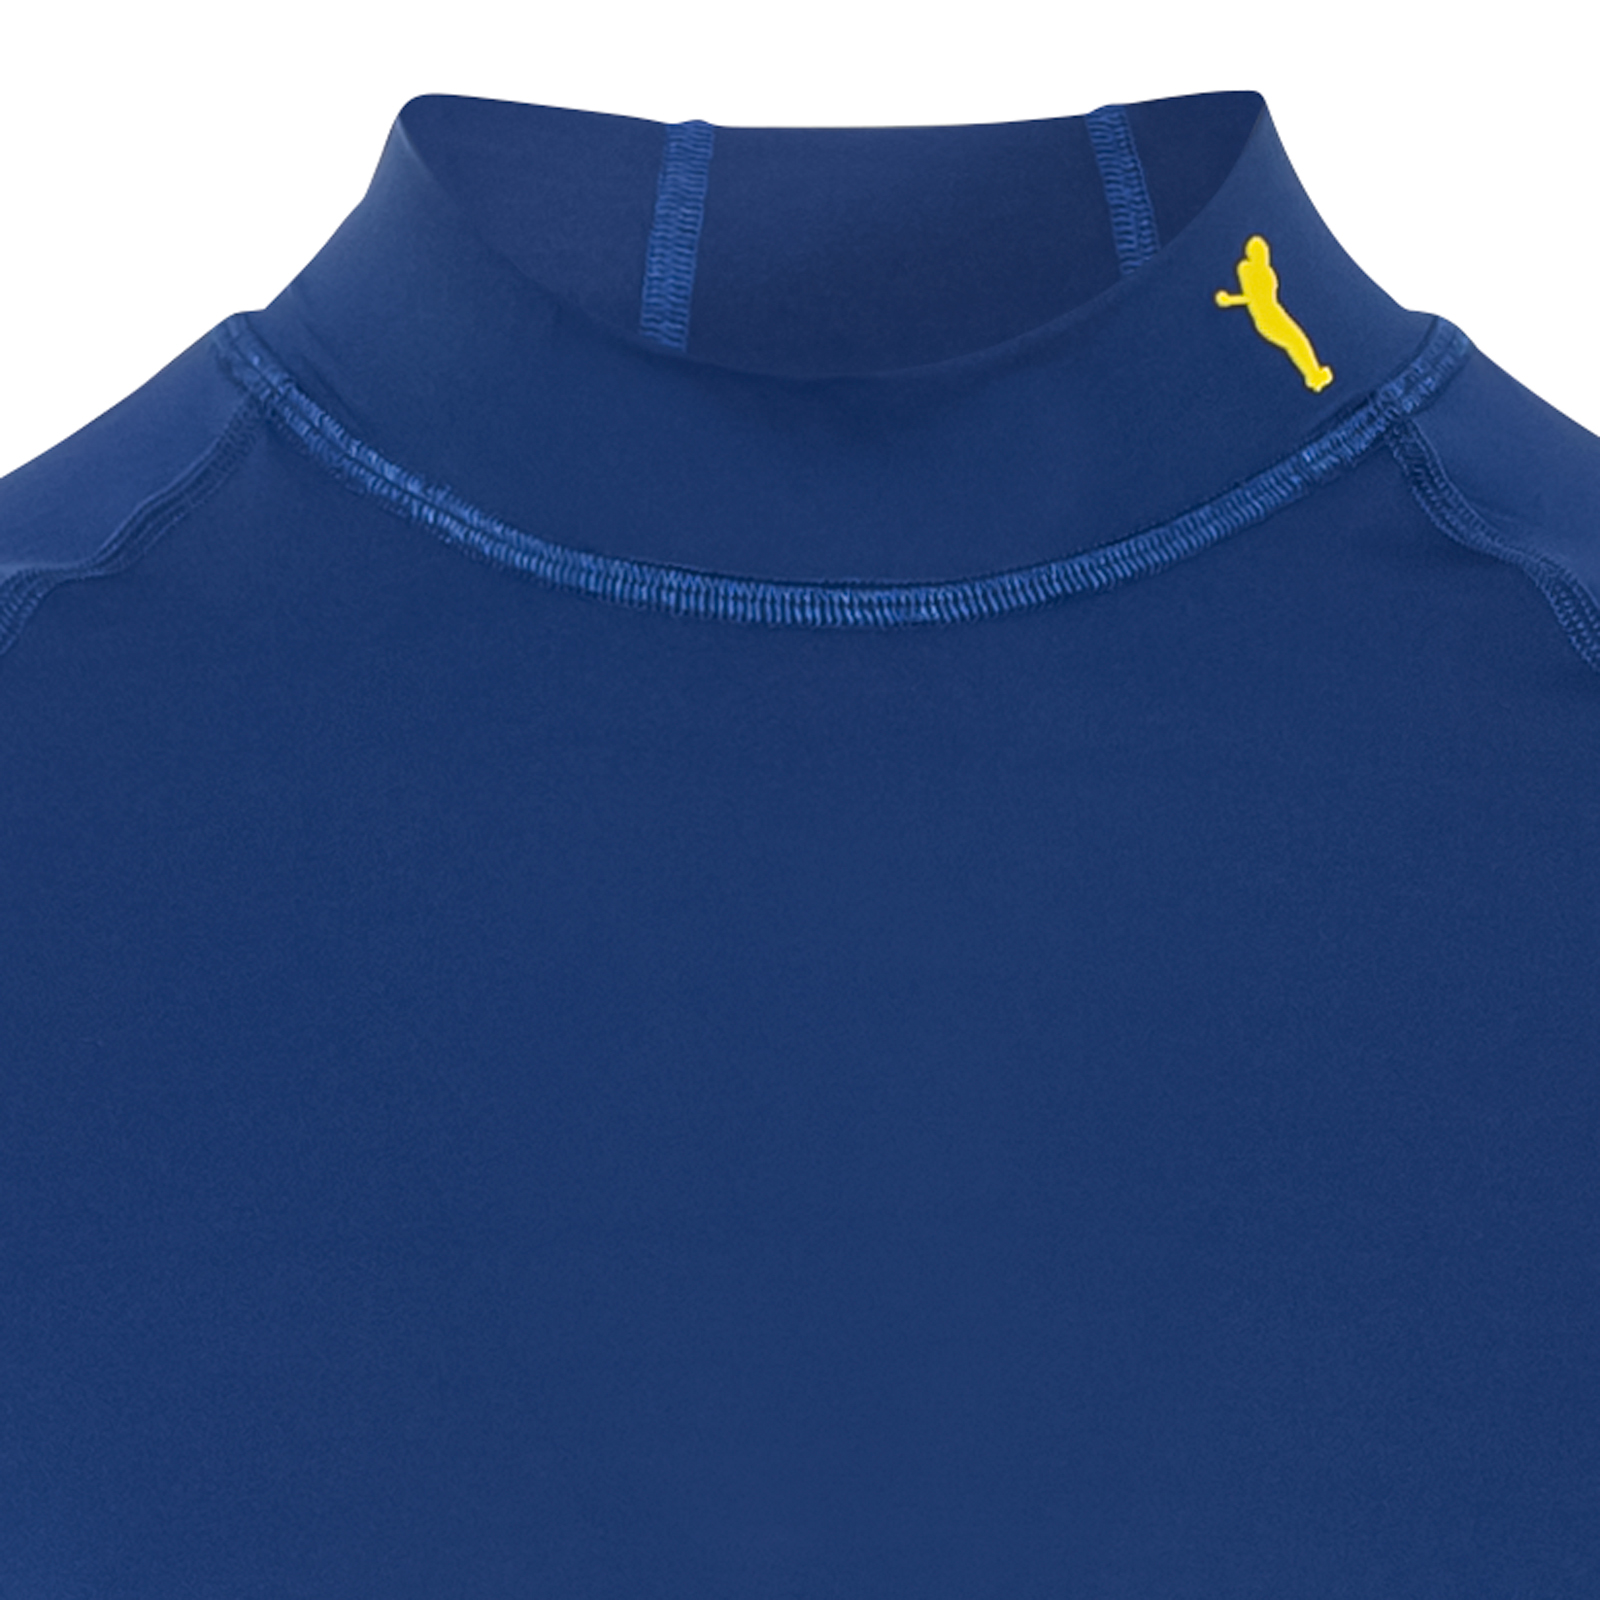 Extra leichtes First Layer Herren Langarm Golf Shirt